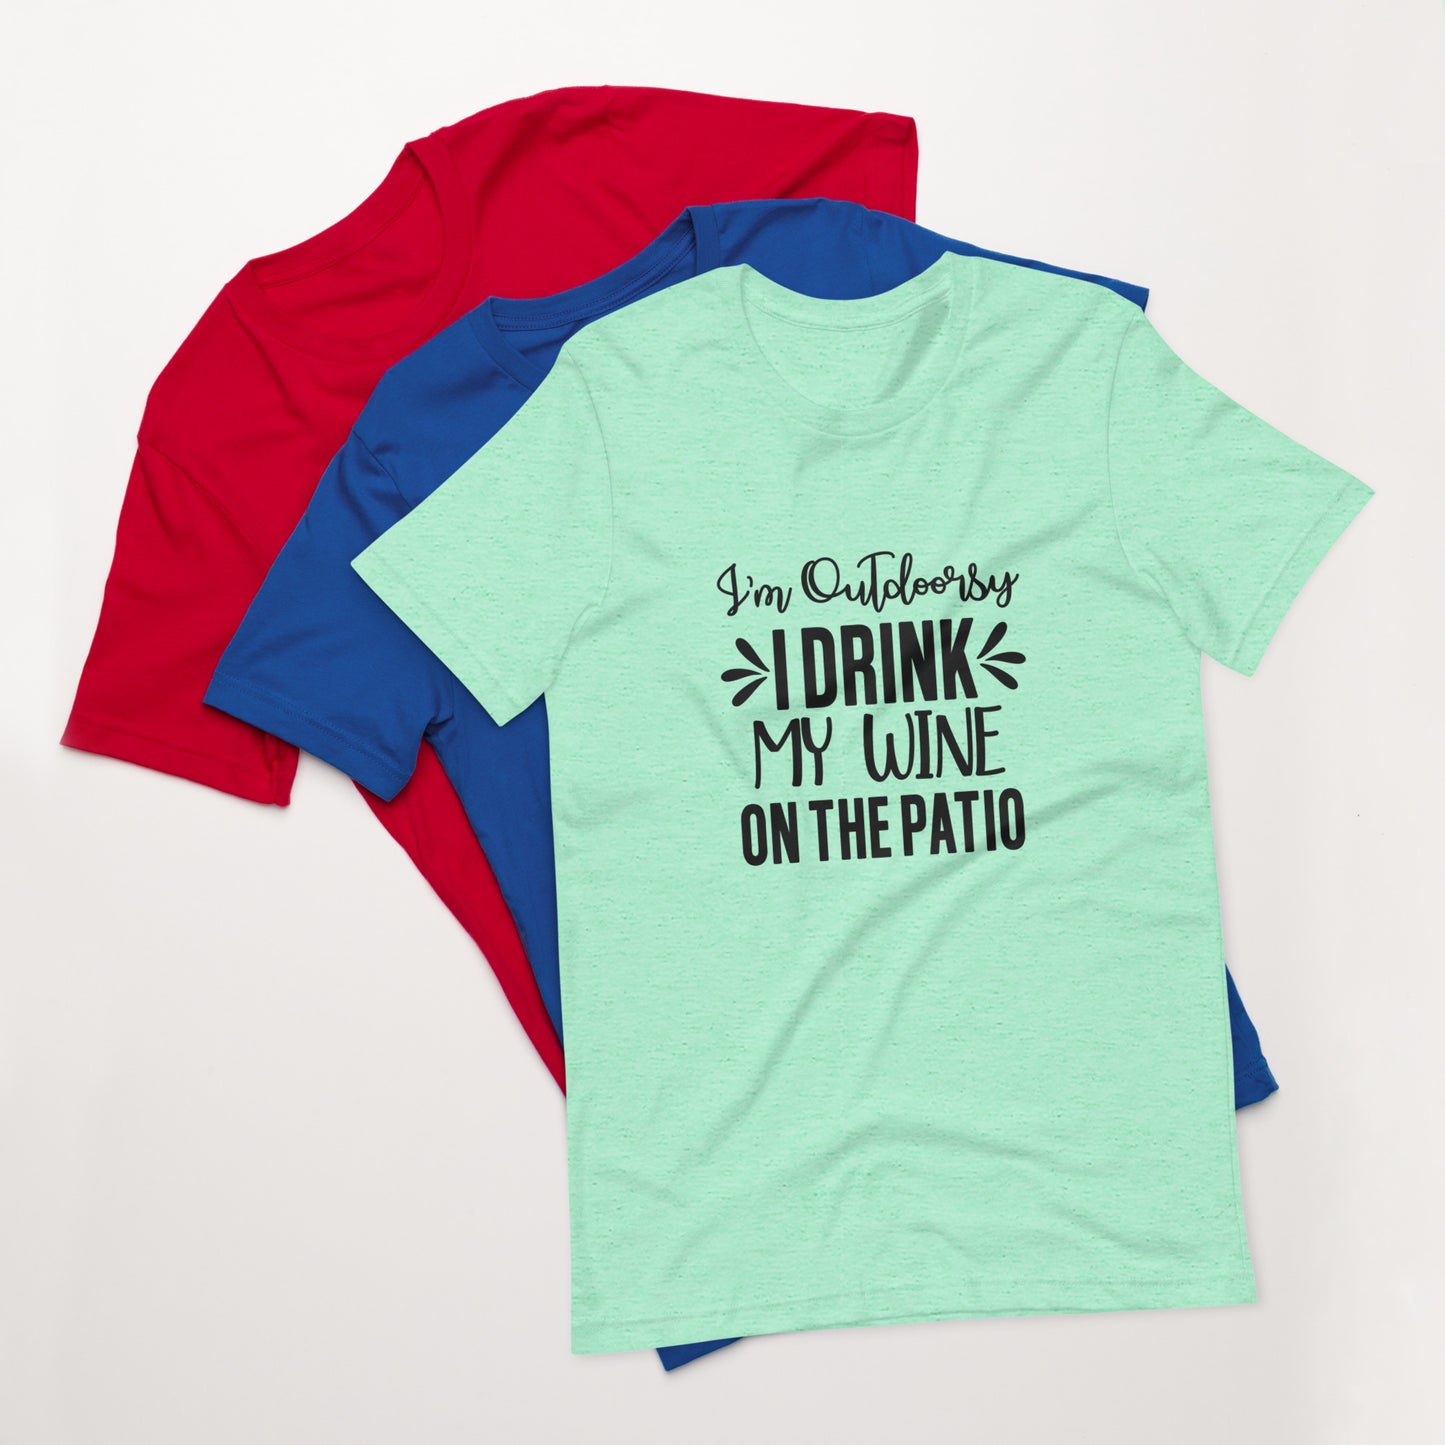 I'm Outdoorsy - I Drink My Wine on the Patio Unisex t-shirt